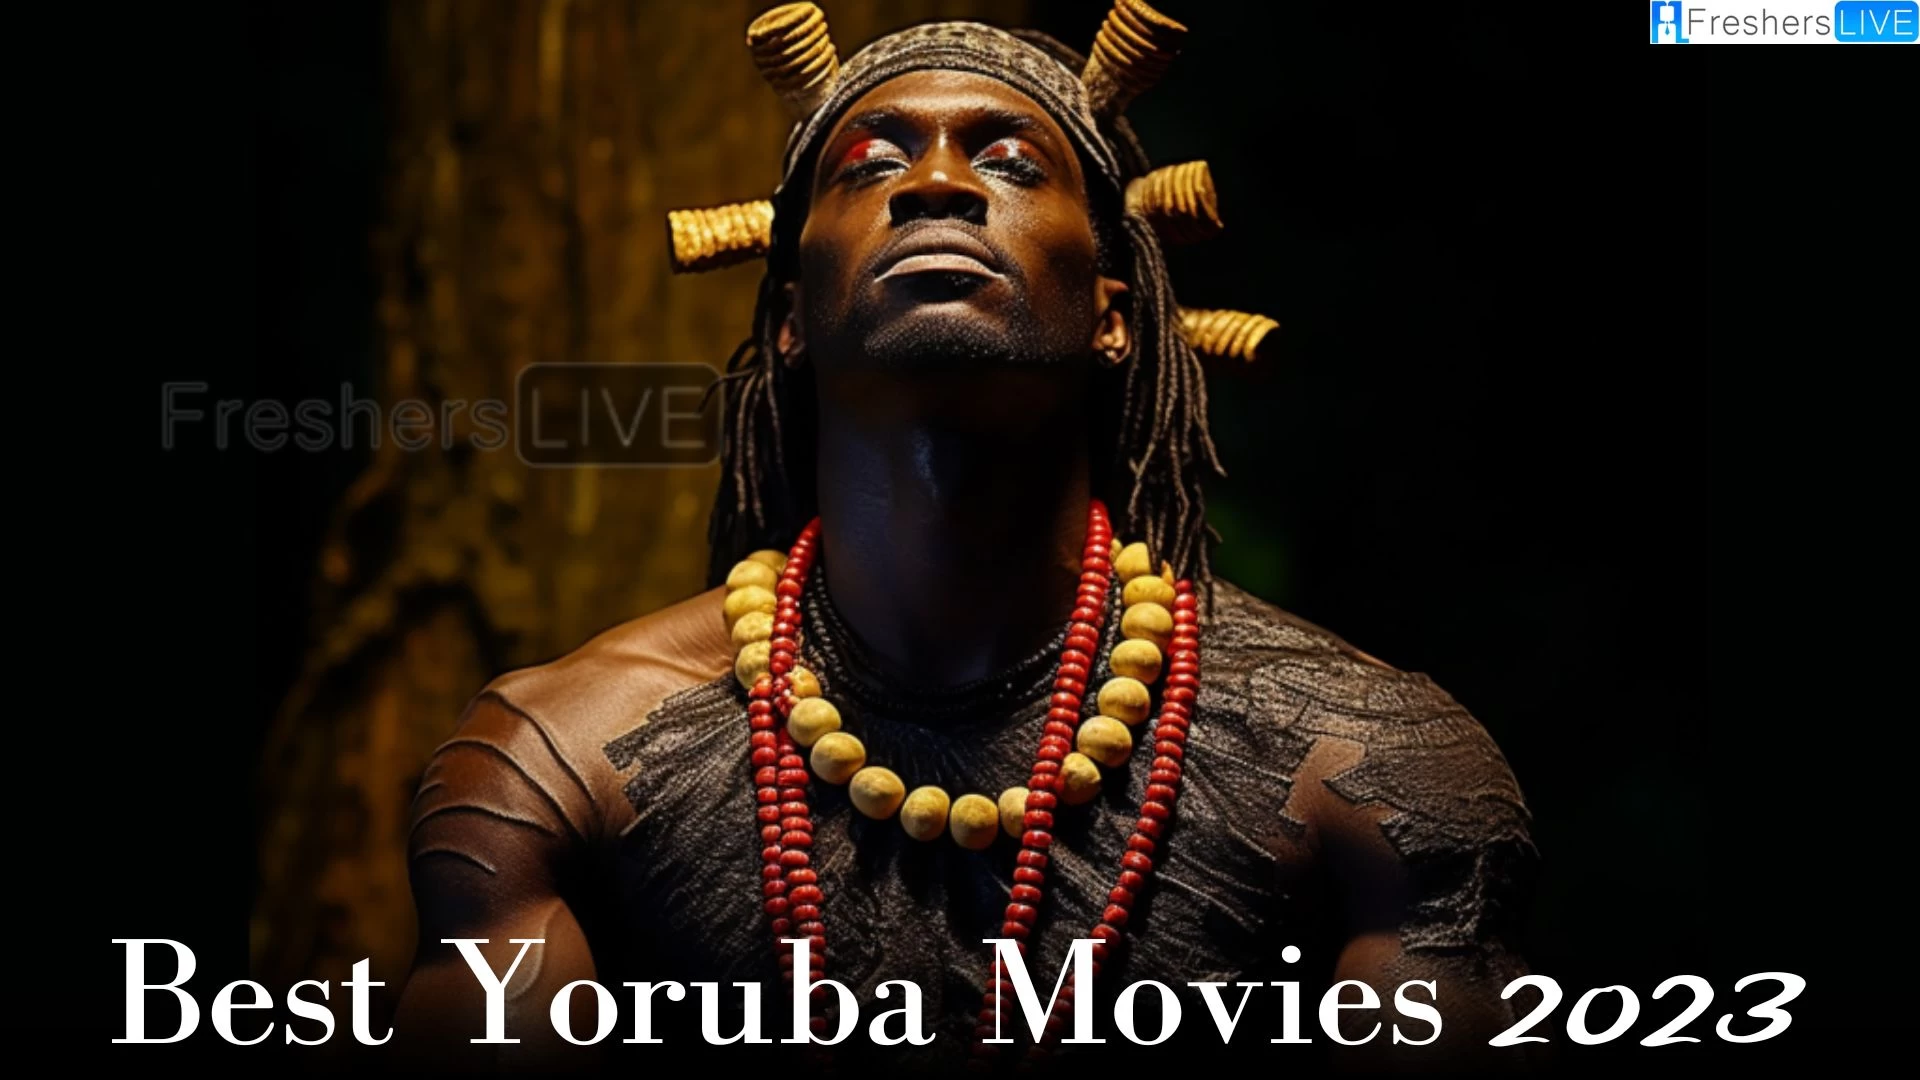 Best Yoruba Movies 2023 - Top 10 Beyond Cultural Boundaries